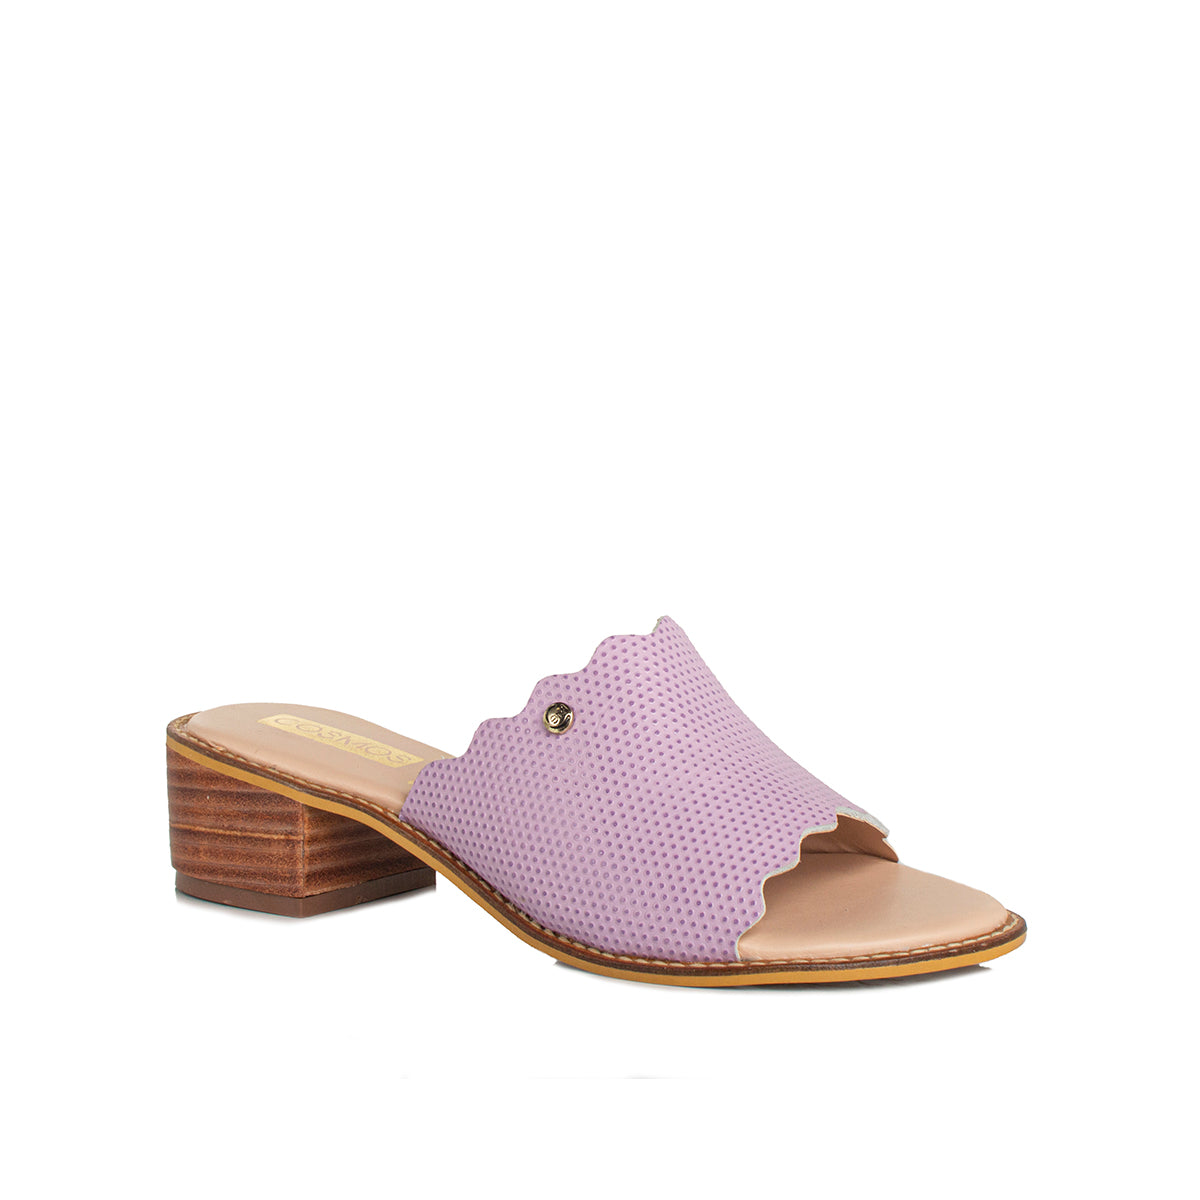 Sandalia de cuero color lila, para dama